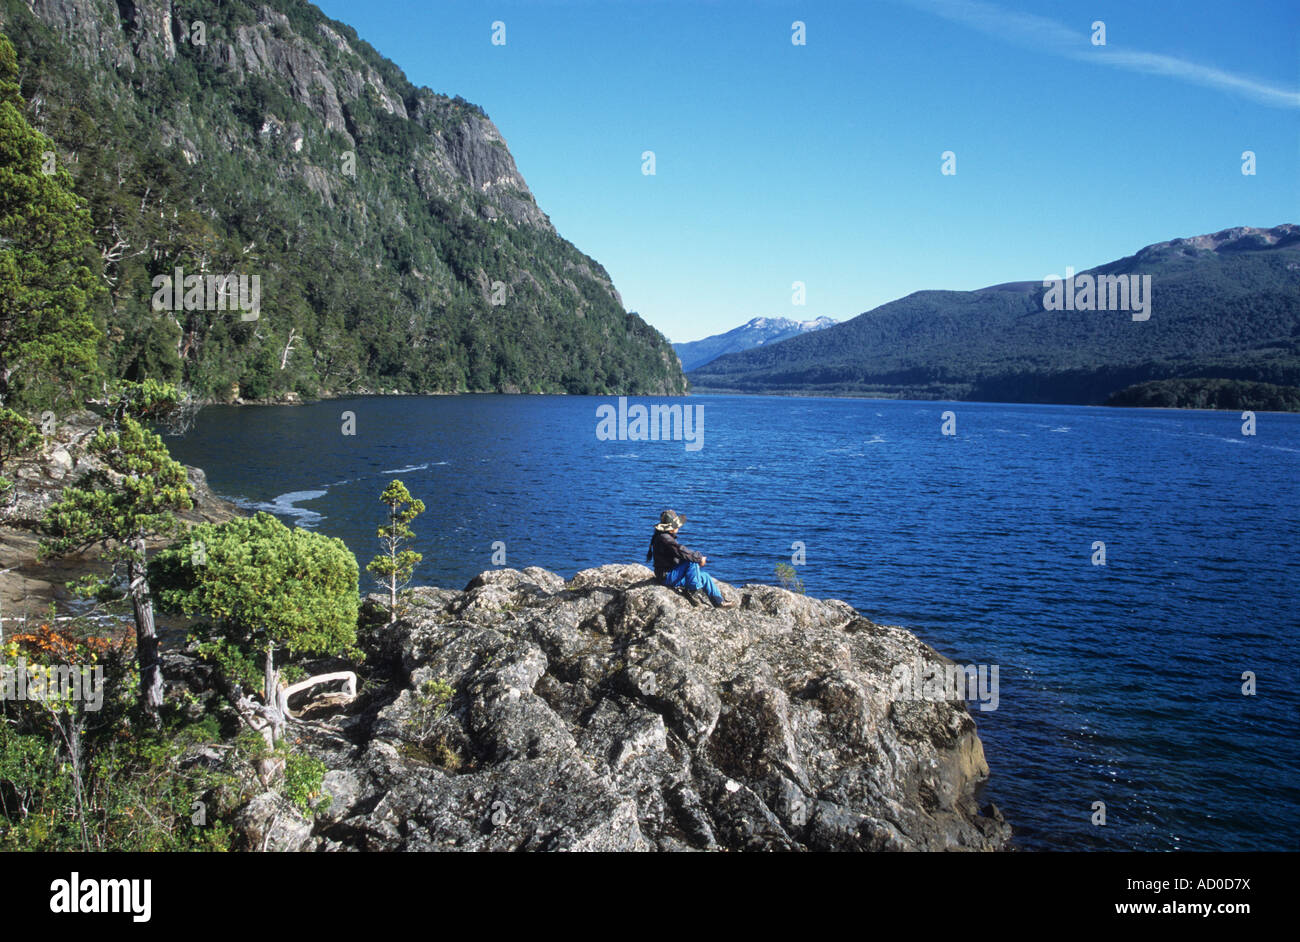 Trekker sitting on rocks looking at view on shore of Lake Paimun, Lanin National Park, Neuquen Province, Argentina Stock Photo